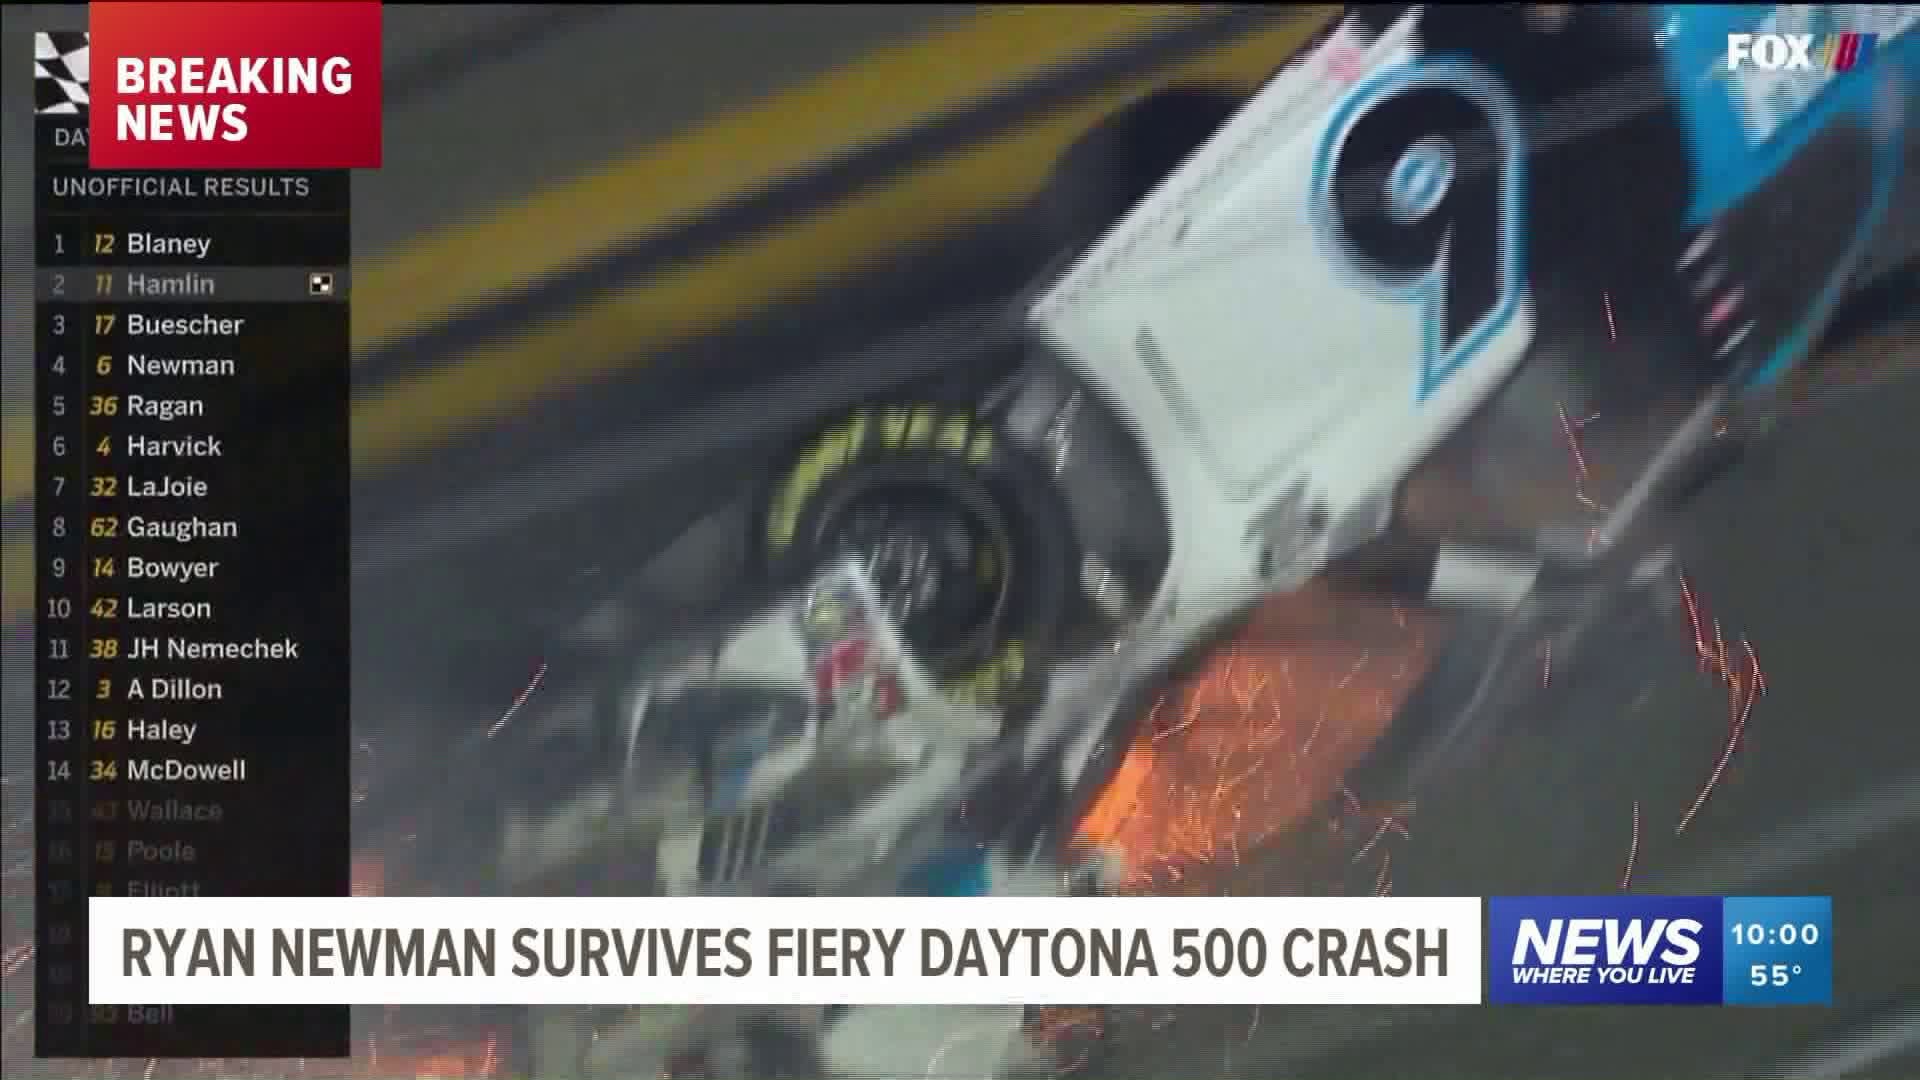 Driver Ryan Newman`s Injuries `Not Life Threatening` After Crash At Daytona 500